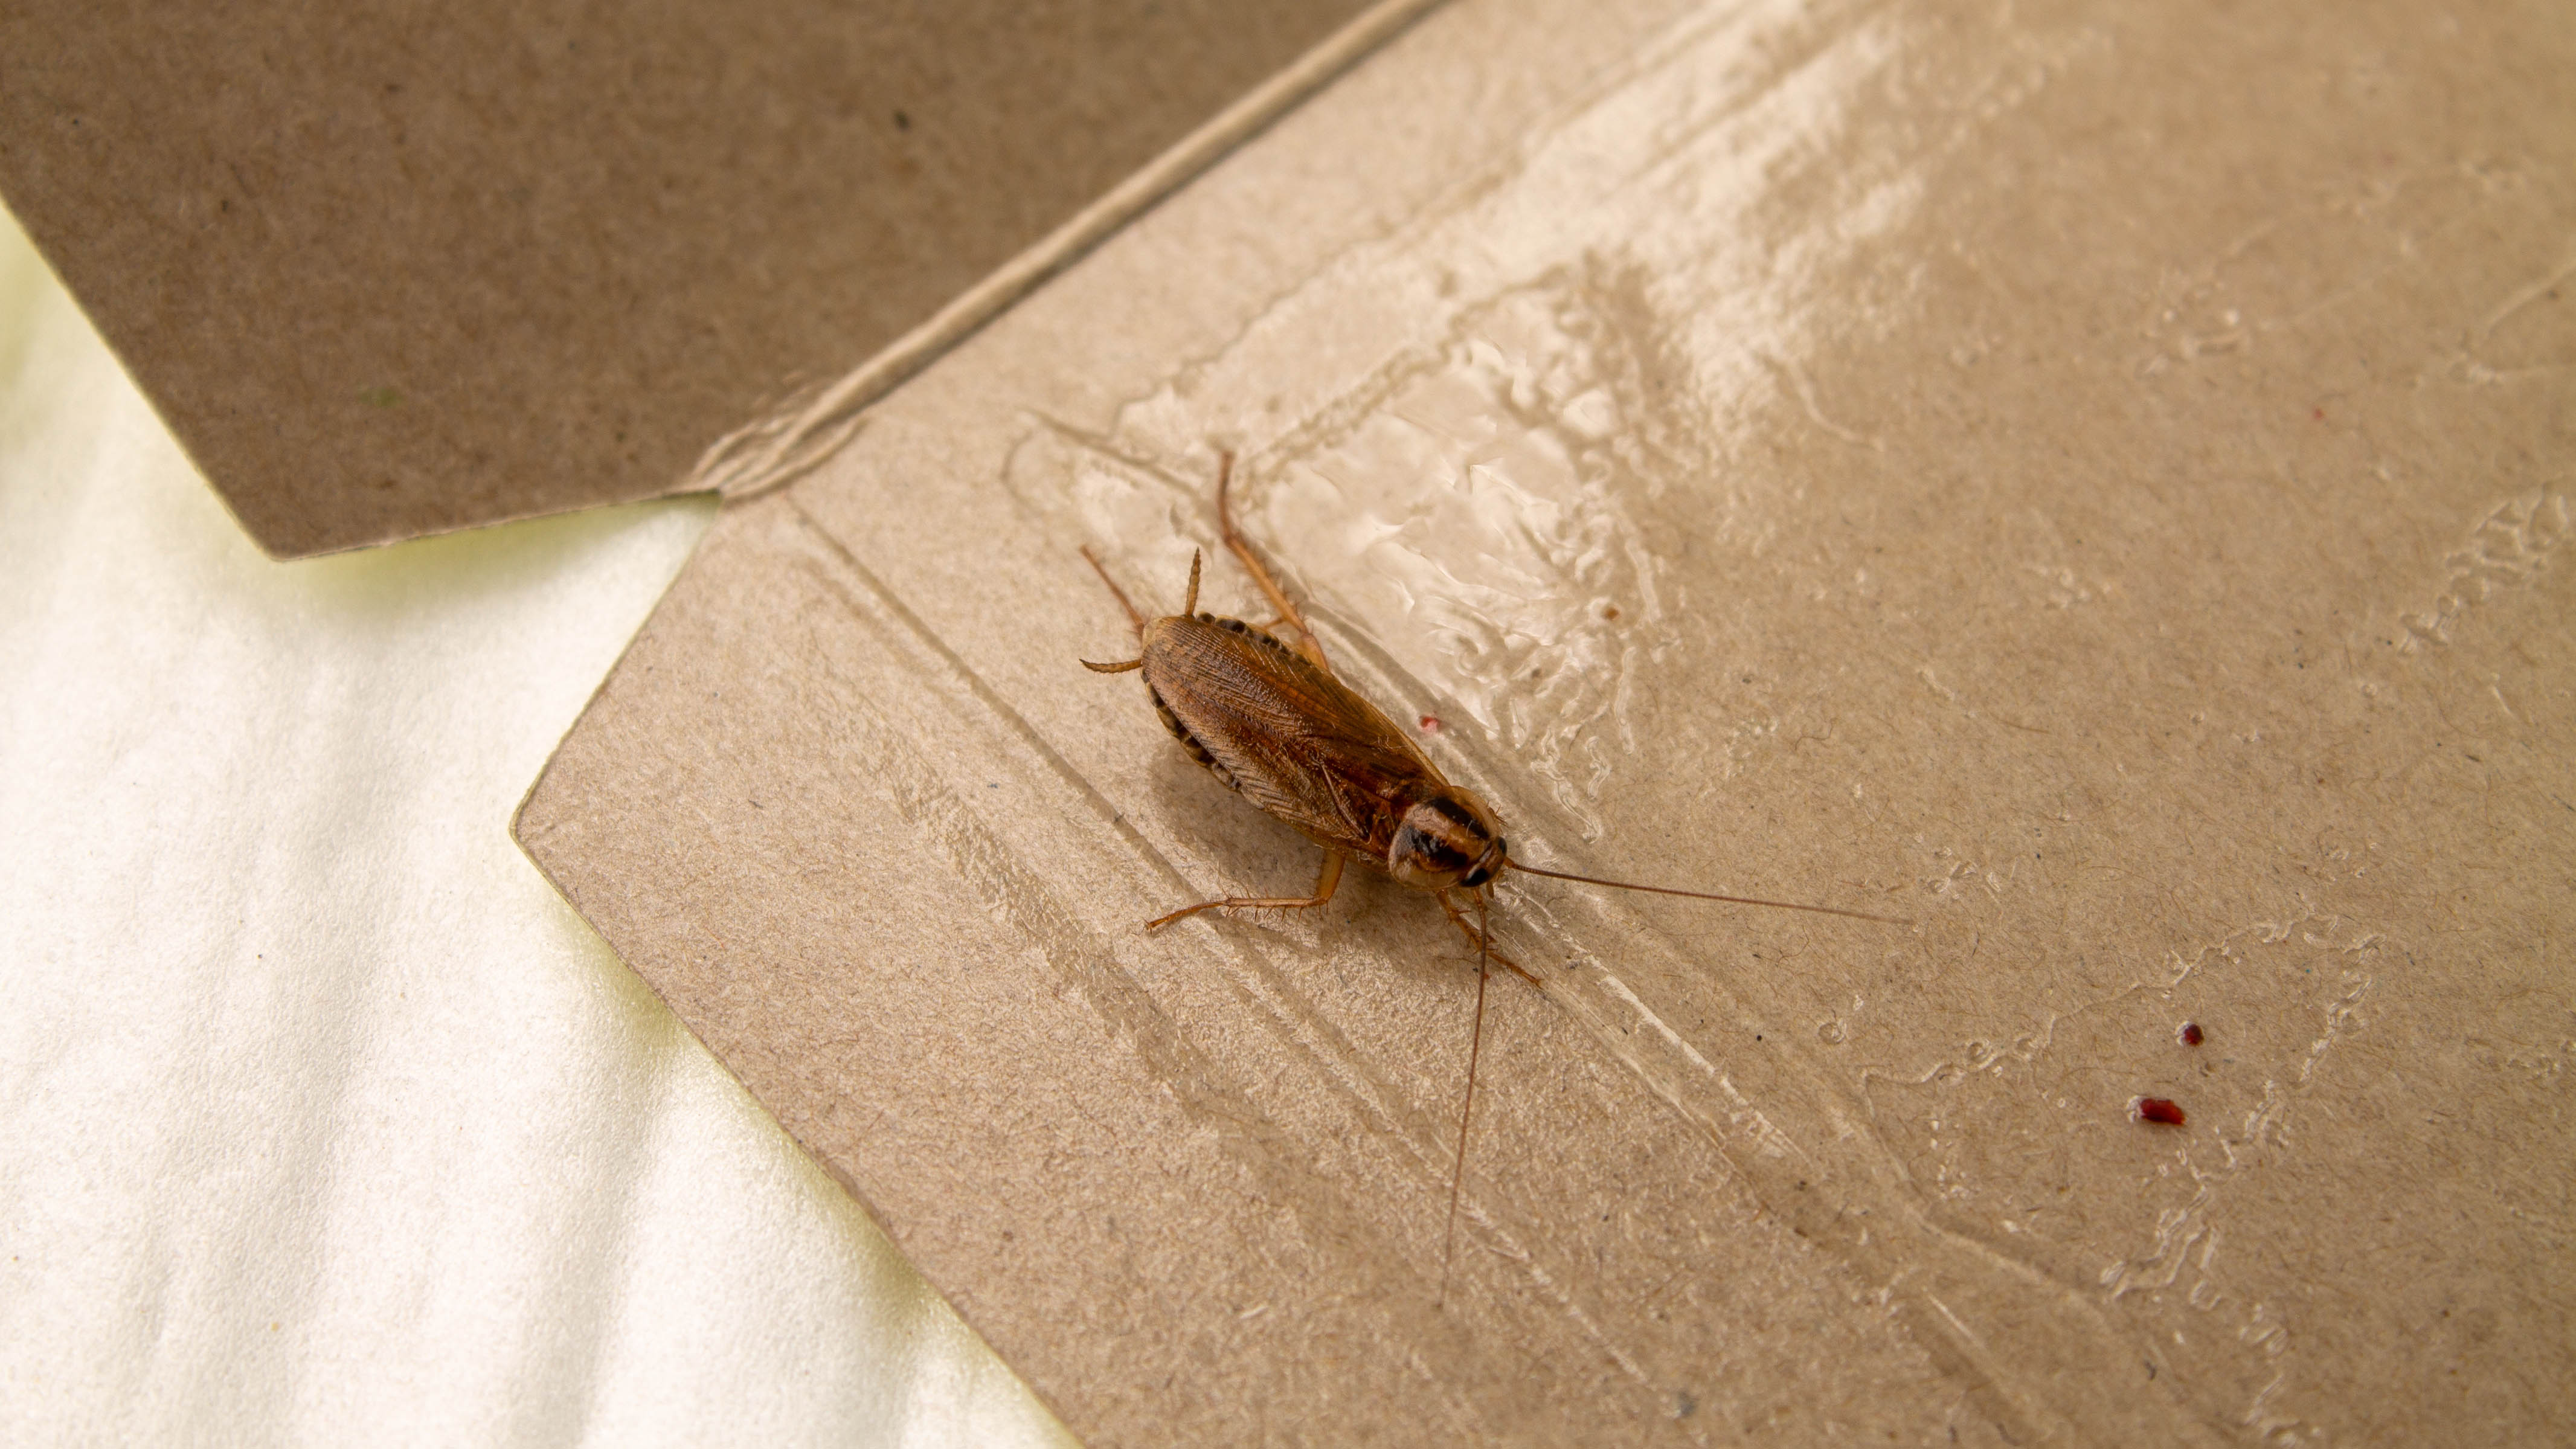 A cockroach caught in a gum trap